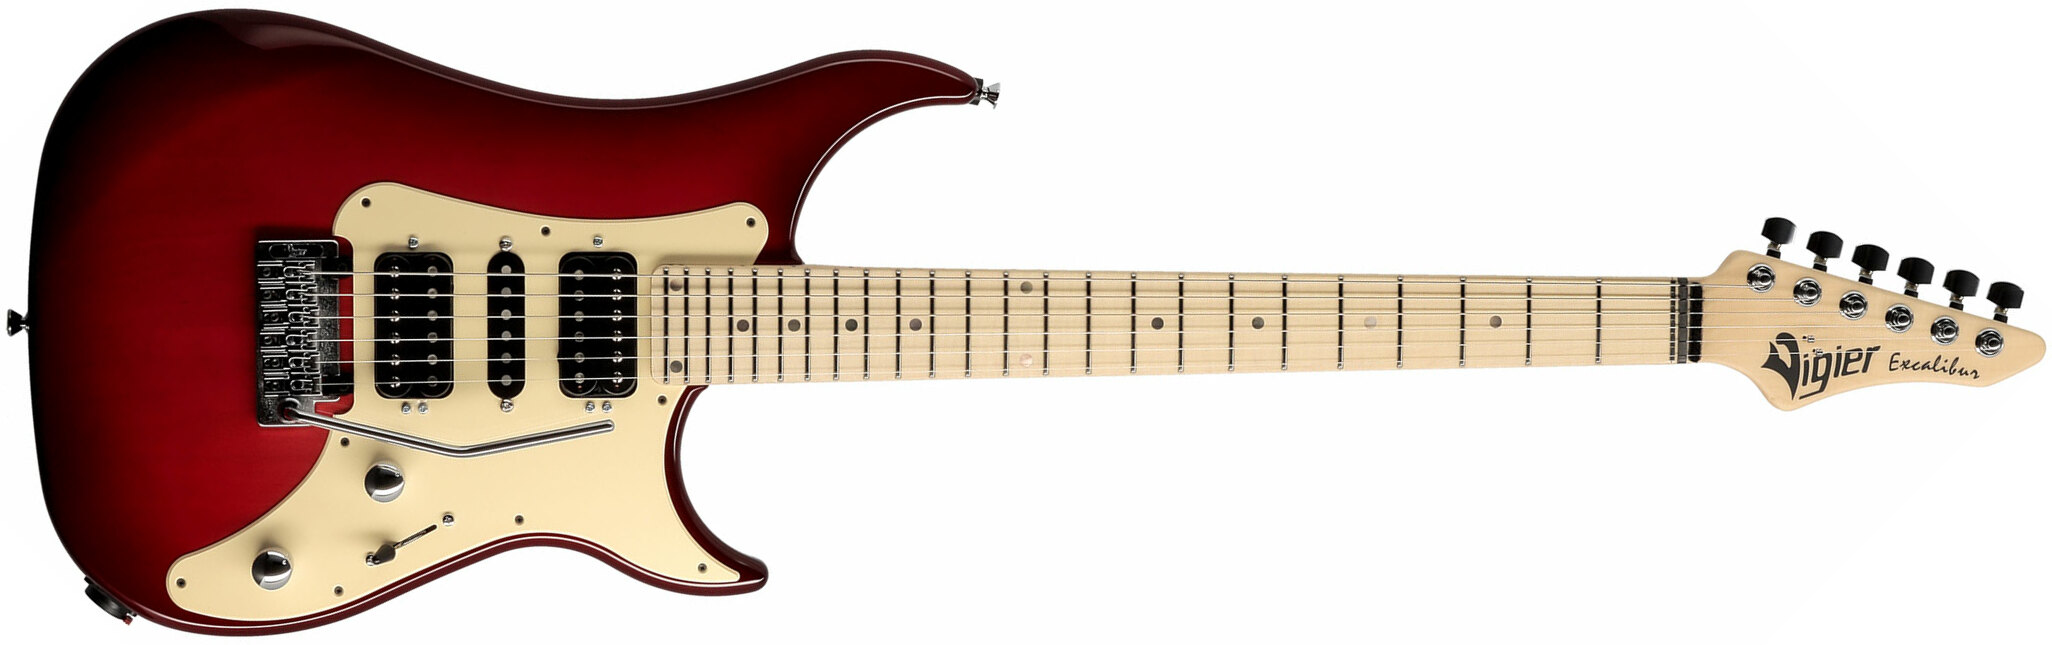 Vigier Excalibur Supraa Hsh Trem Mn - Clear Red - Guitarra eléctrica con forma de str. - Main picture